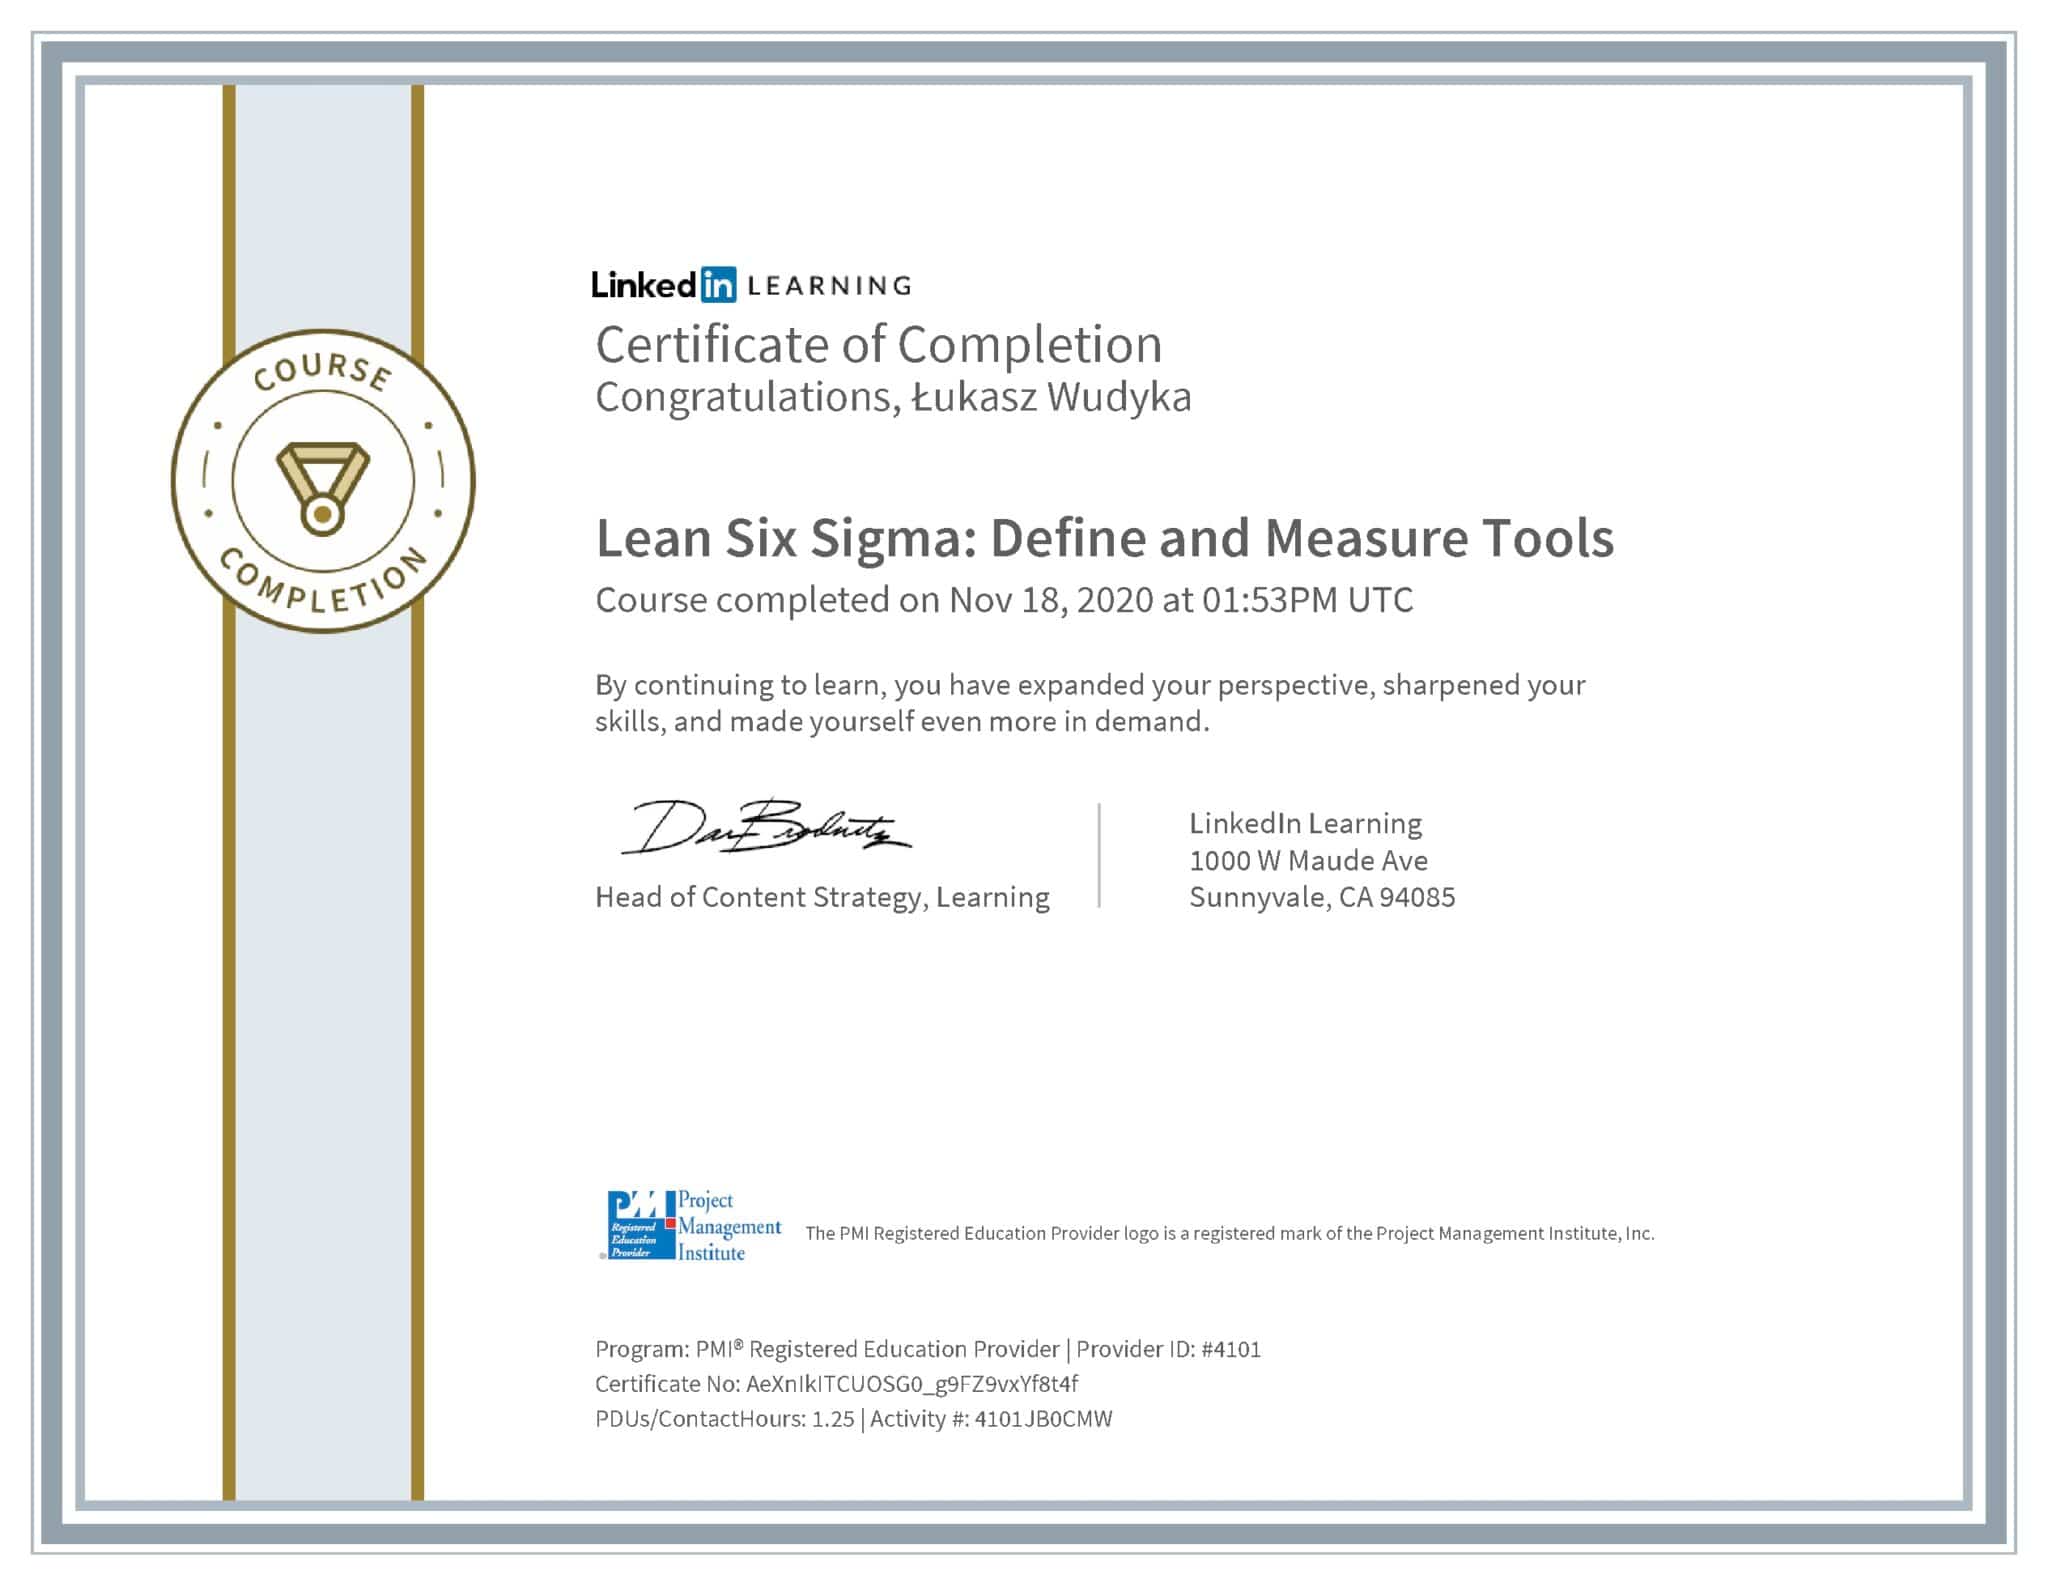 Łukasz Wudyka certyfikat LinkedIn Lean Six Sigma: Define and Measure Tools PMI